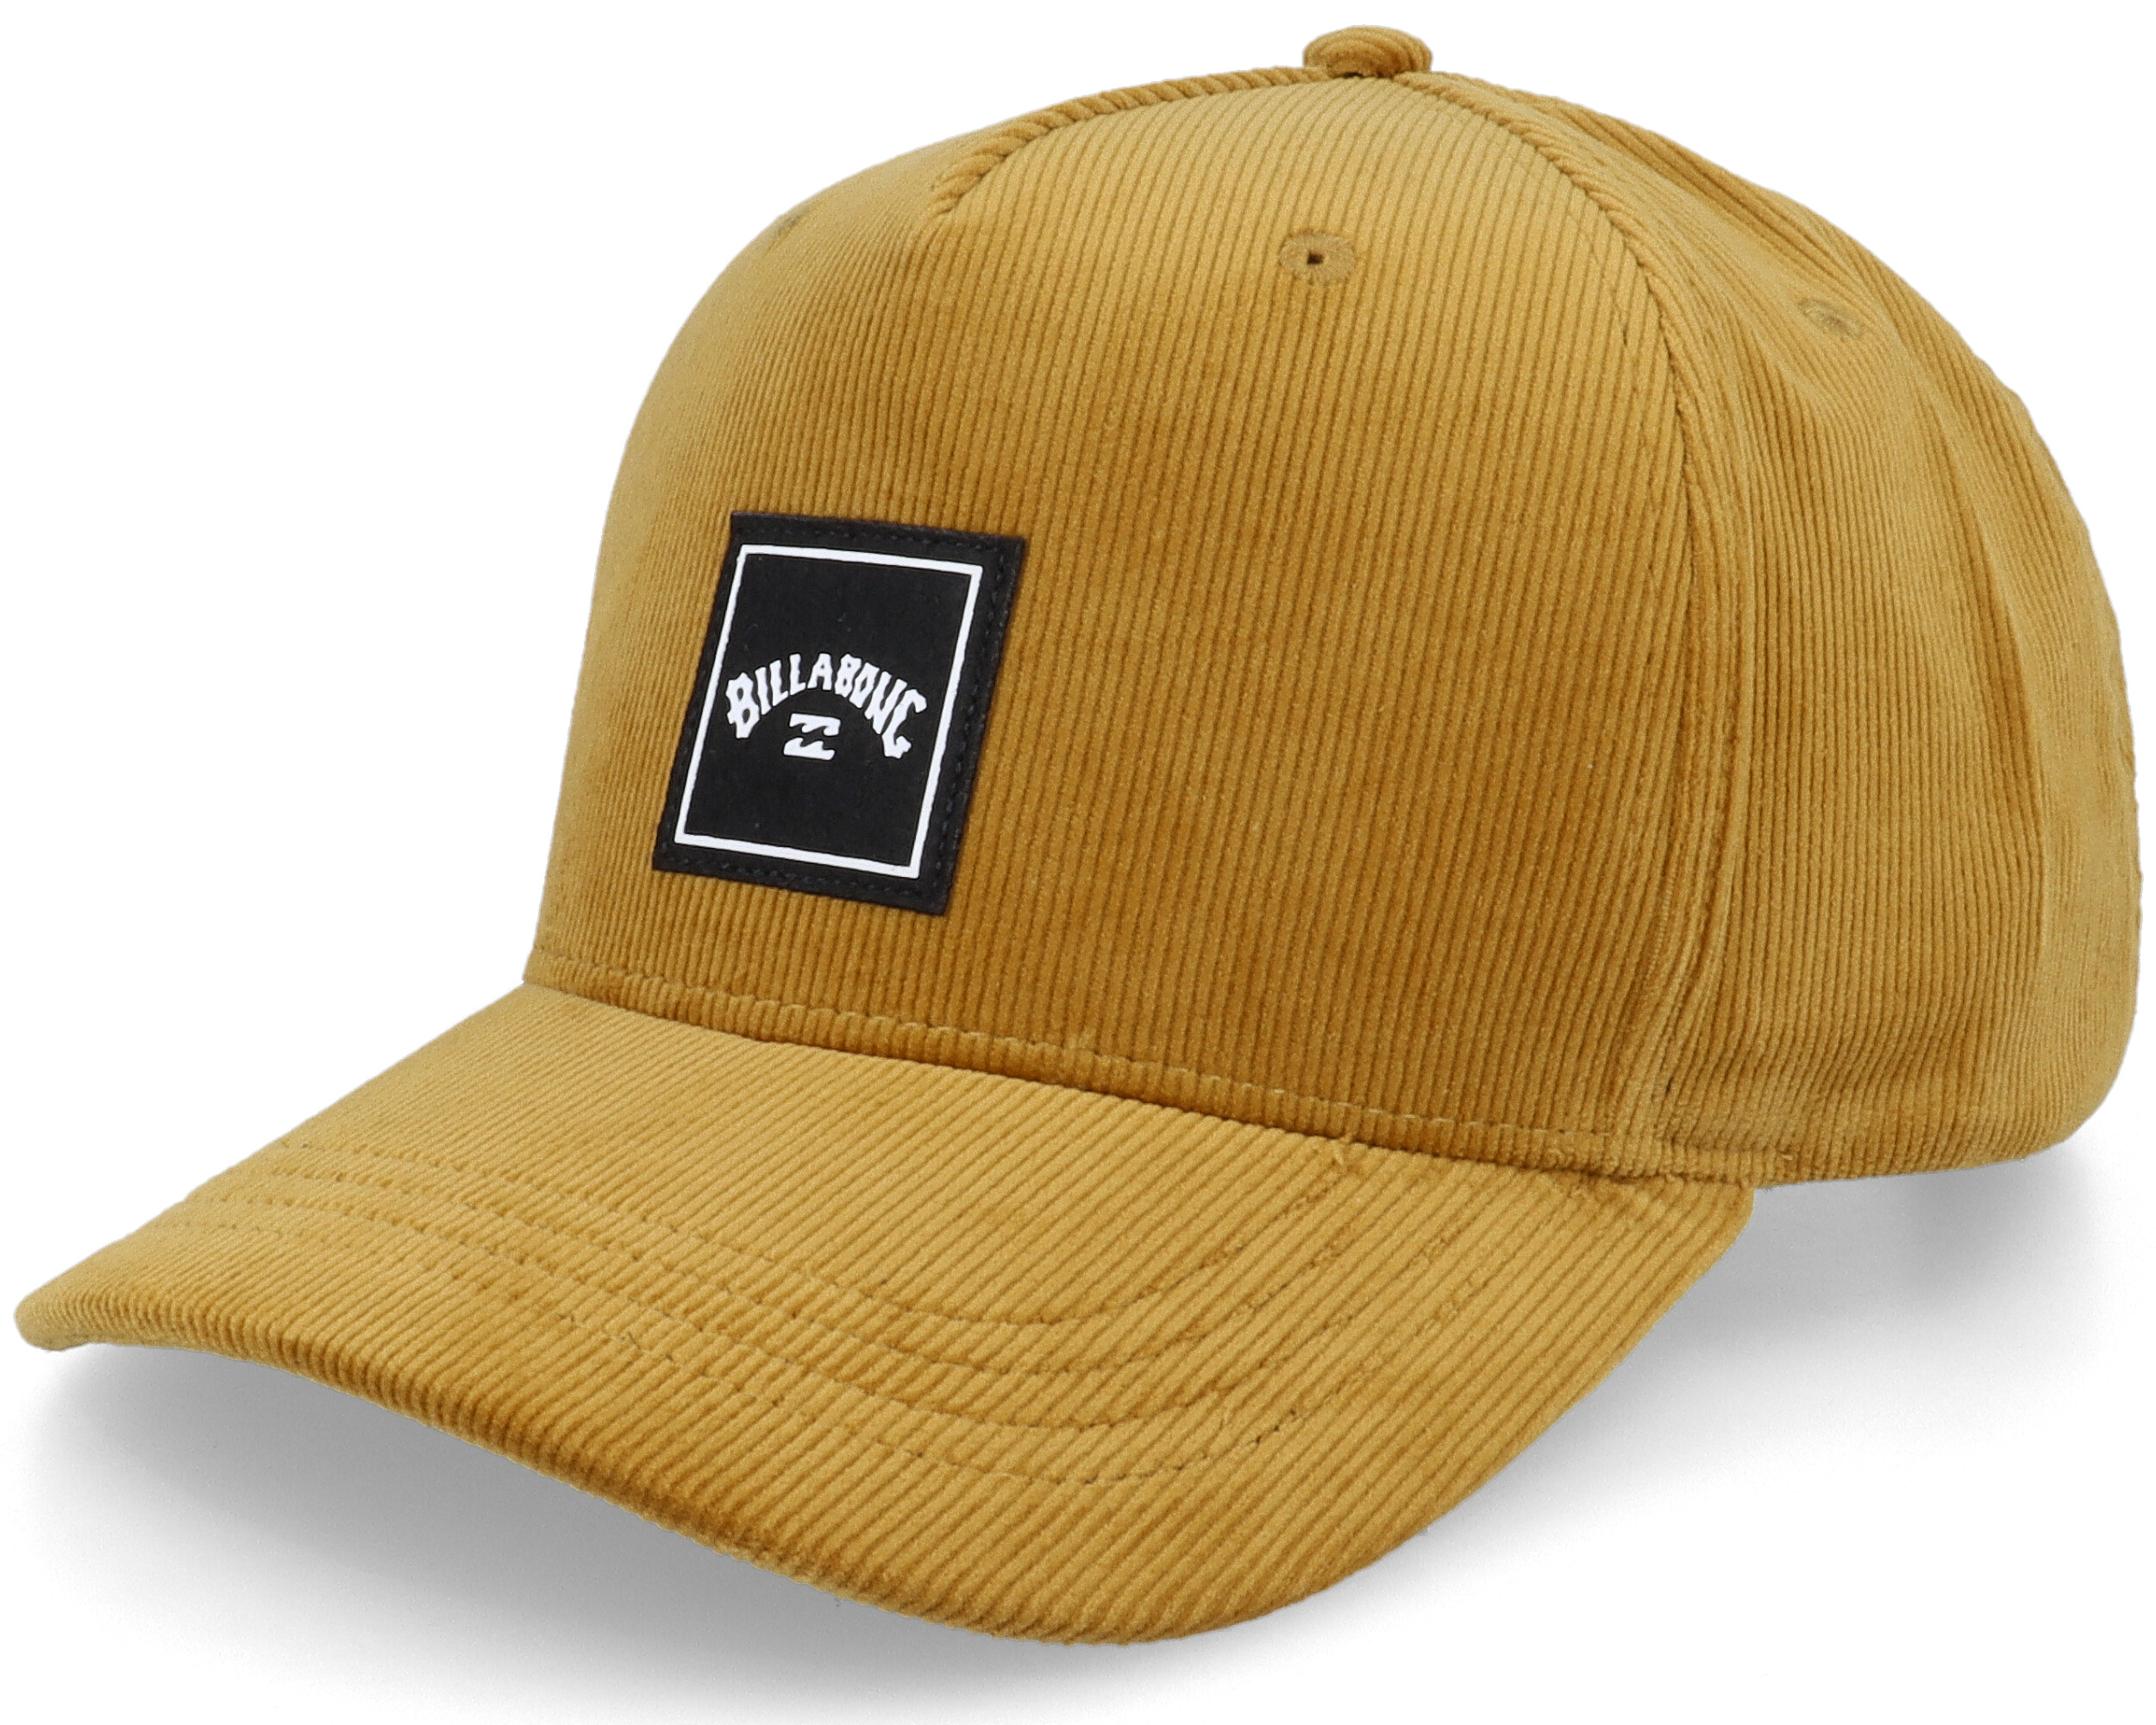 Stacked Gold - Billabong Adjustable cap